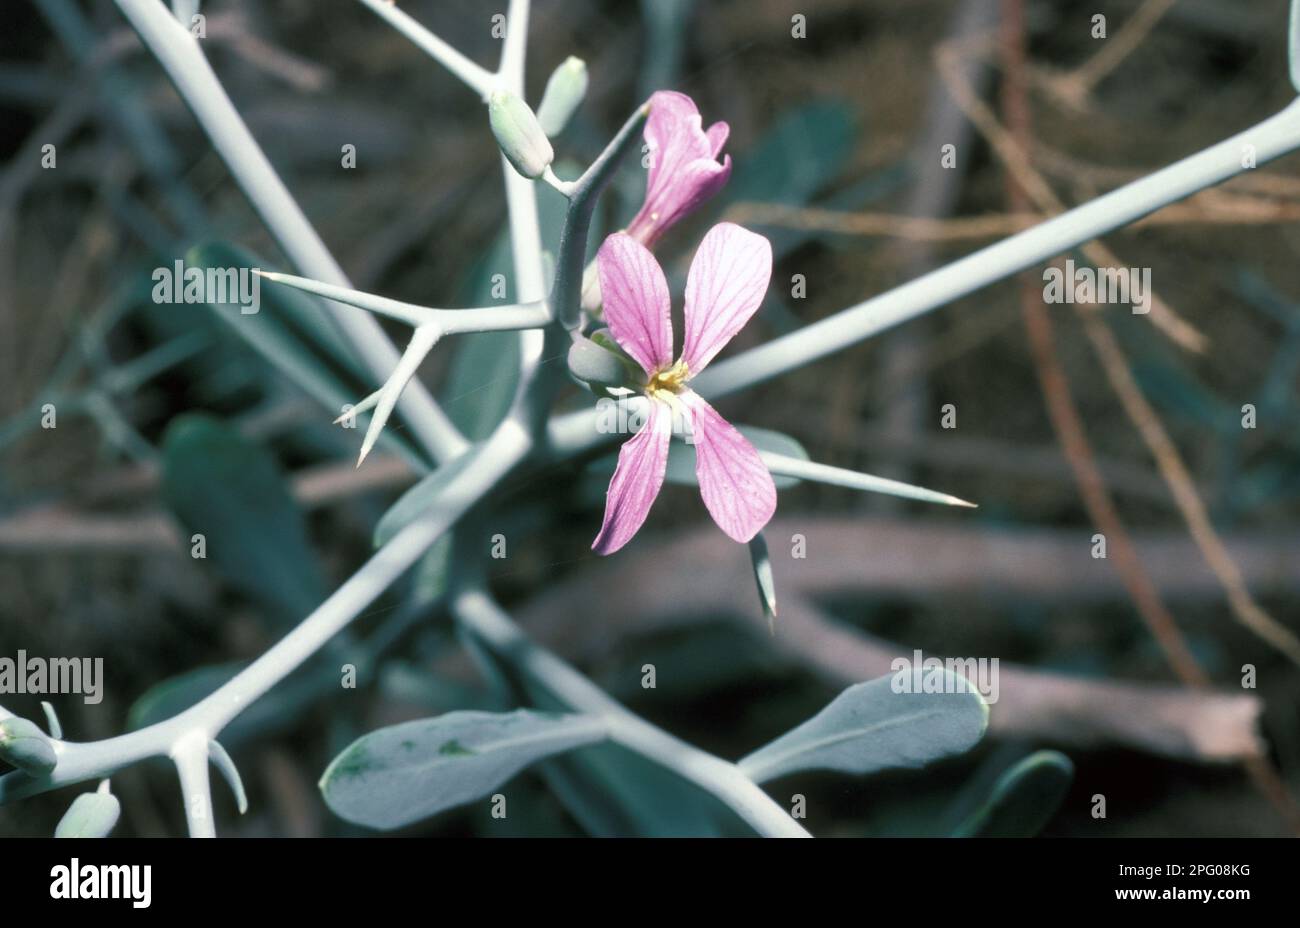 Cruciferous plant, Moricandia nitens Stock Photo